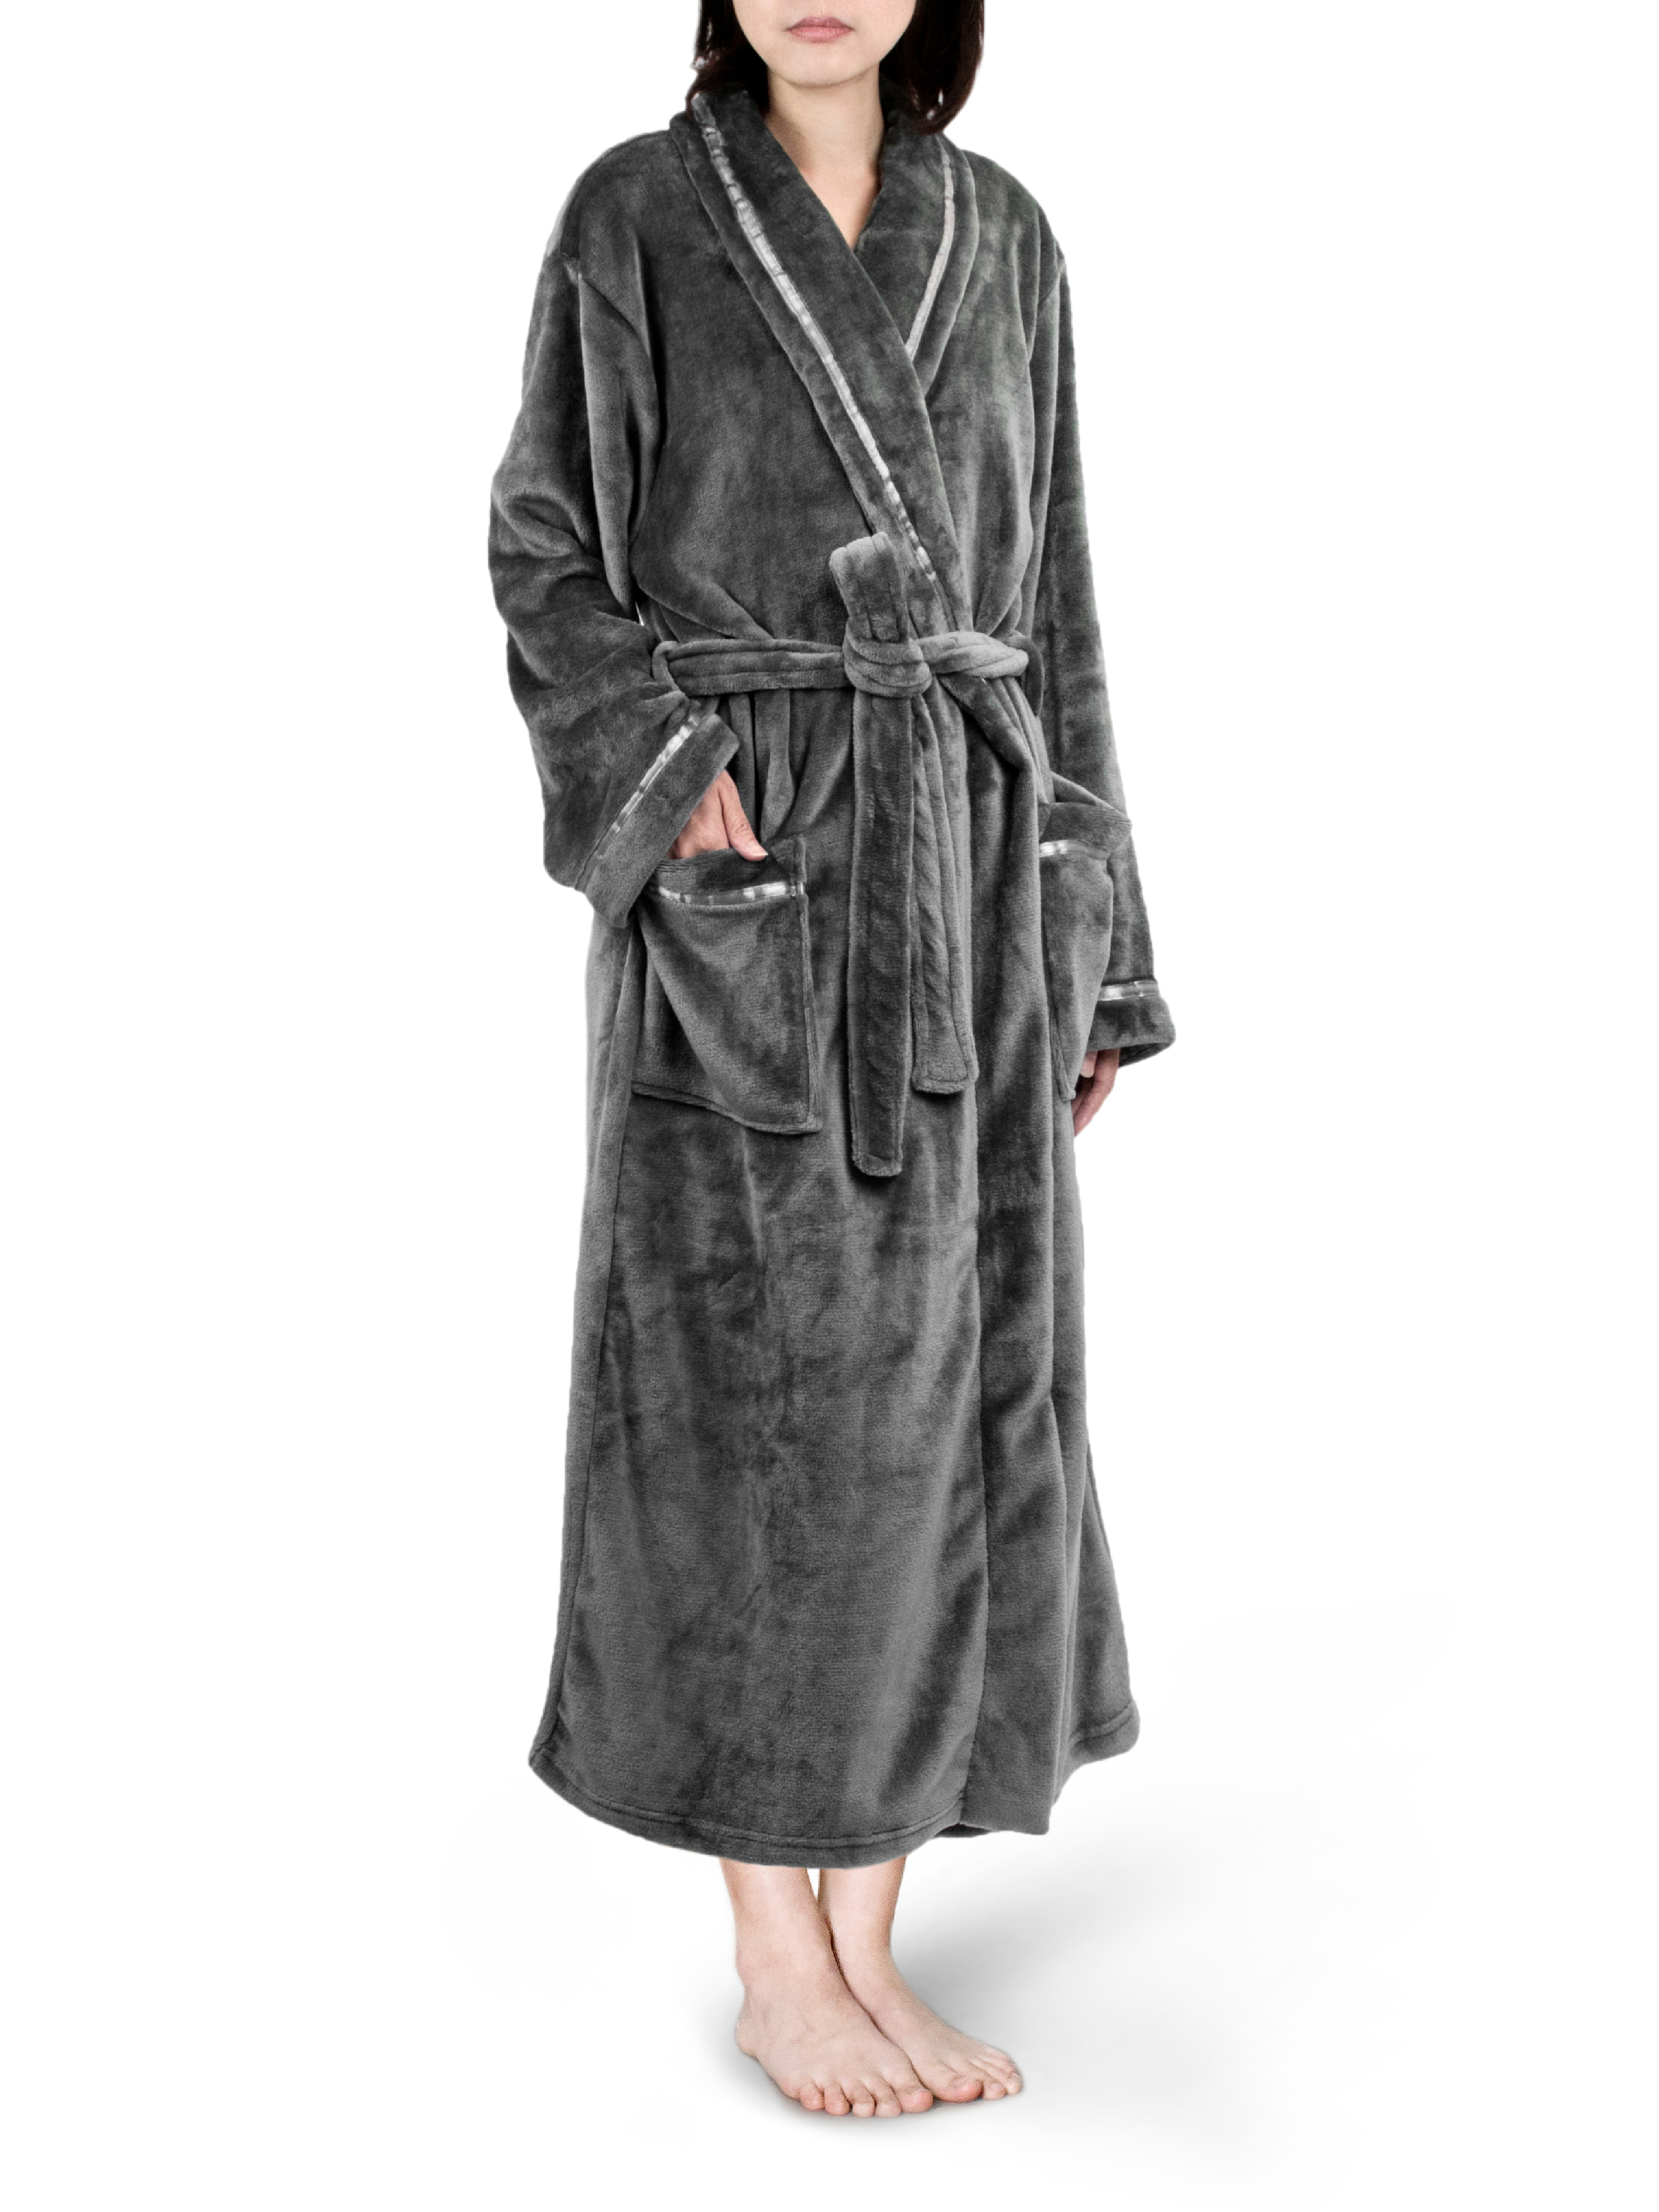 PAVILIA Mens Robe, Soft Robe for Men, Fleece Warm Long Bathrobe for Bath  Shower Spa with Shawl Collar and Pockets, Plush Microfiber - Light Gray